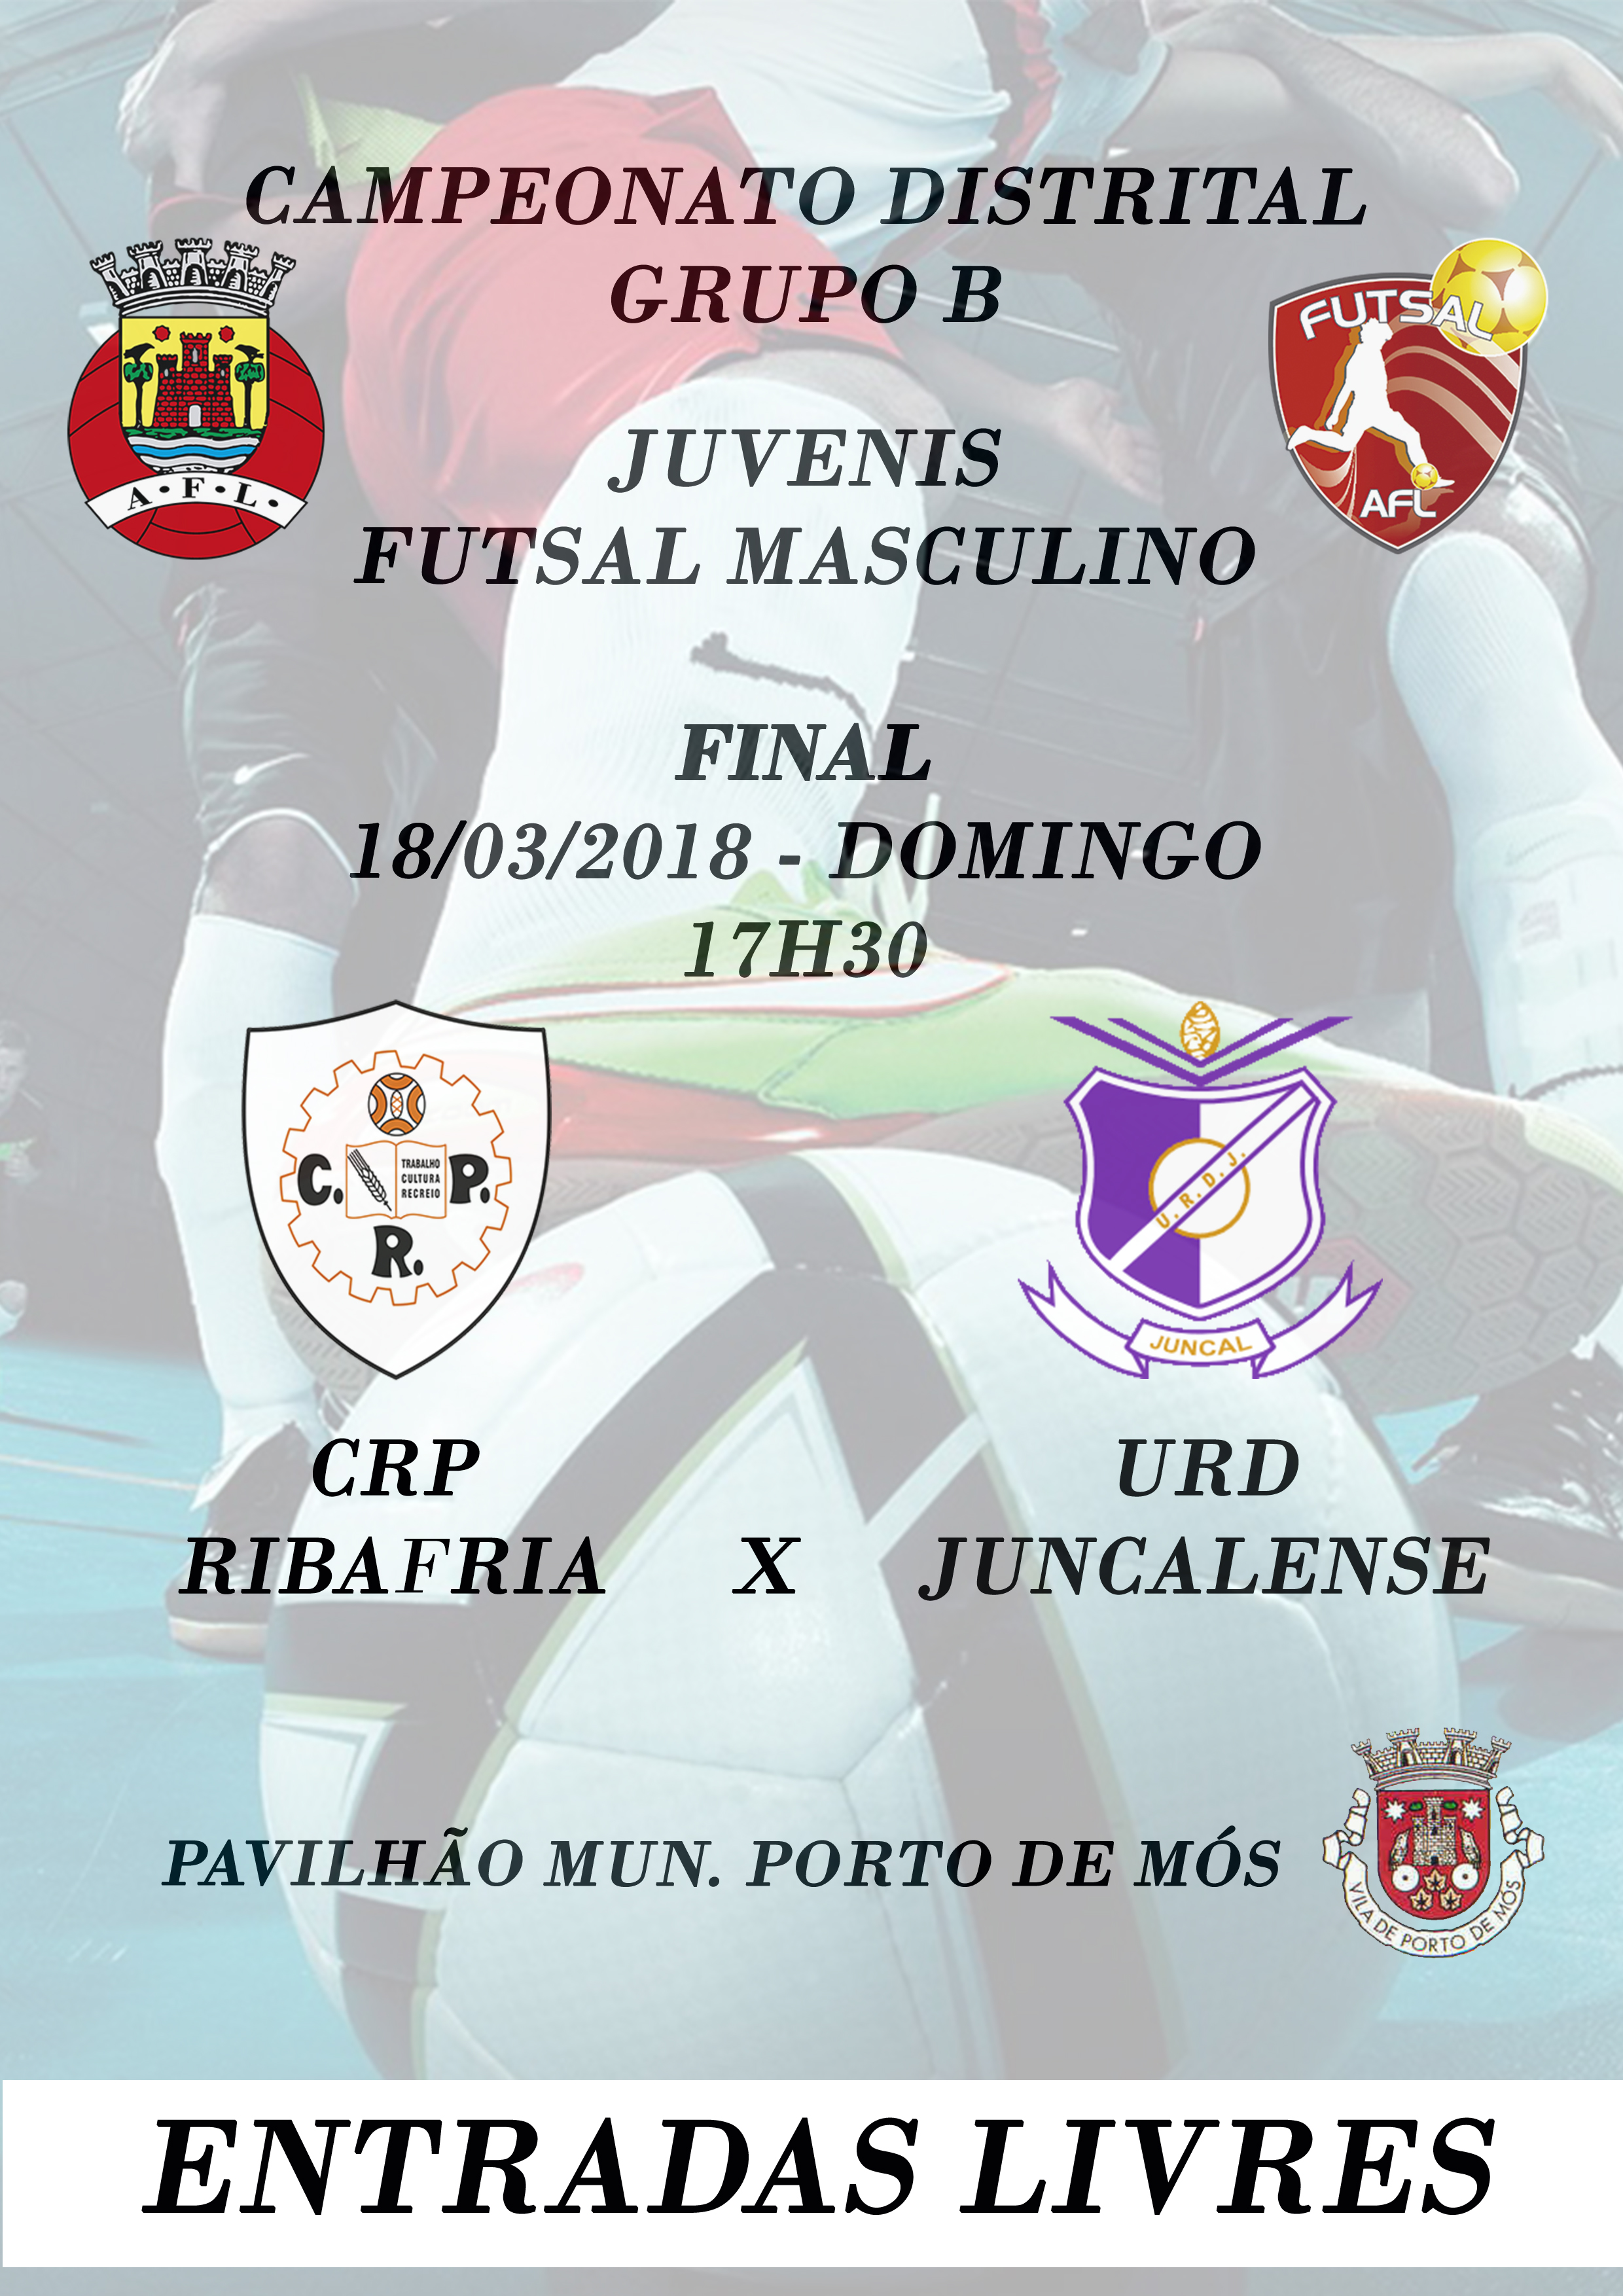 Campeonato Distrital - Grupo B - Juvenis - Futsal Masculino!